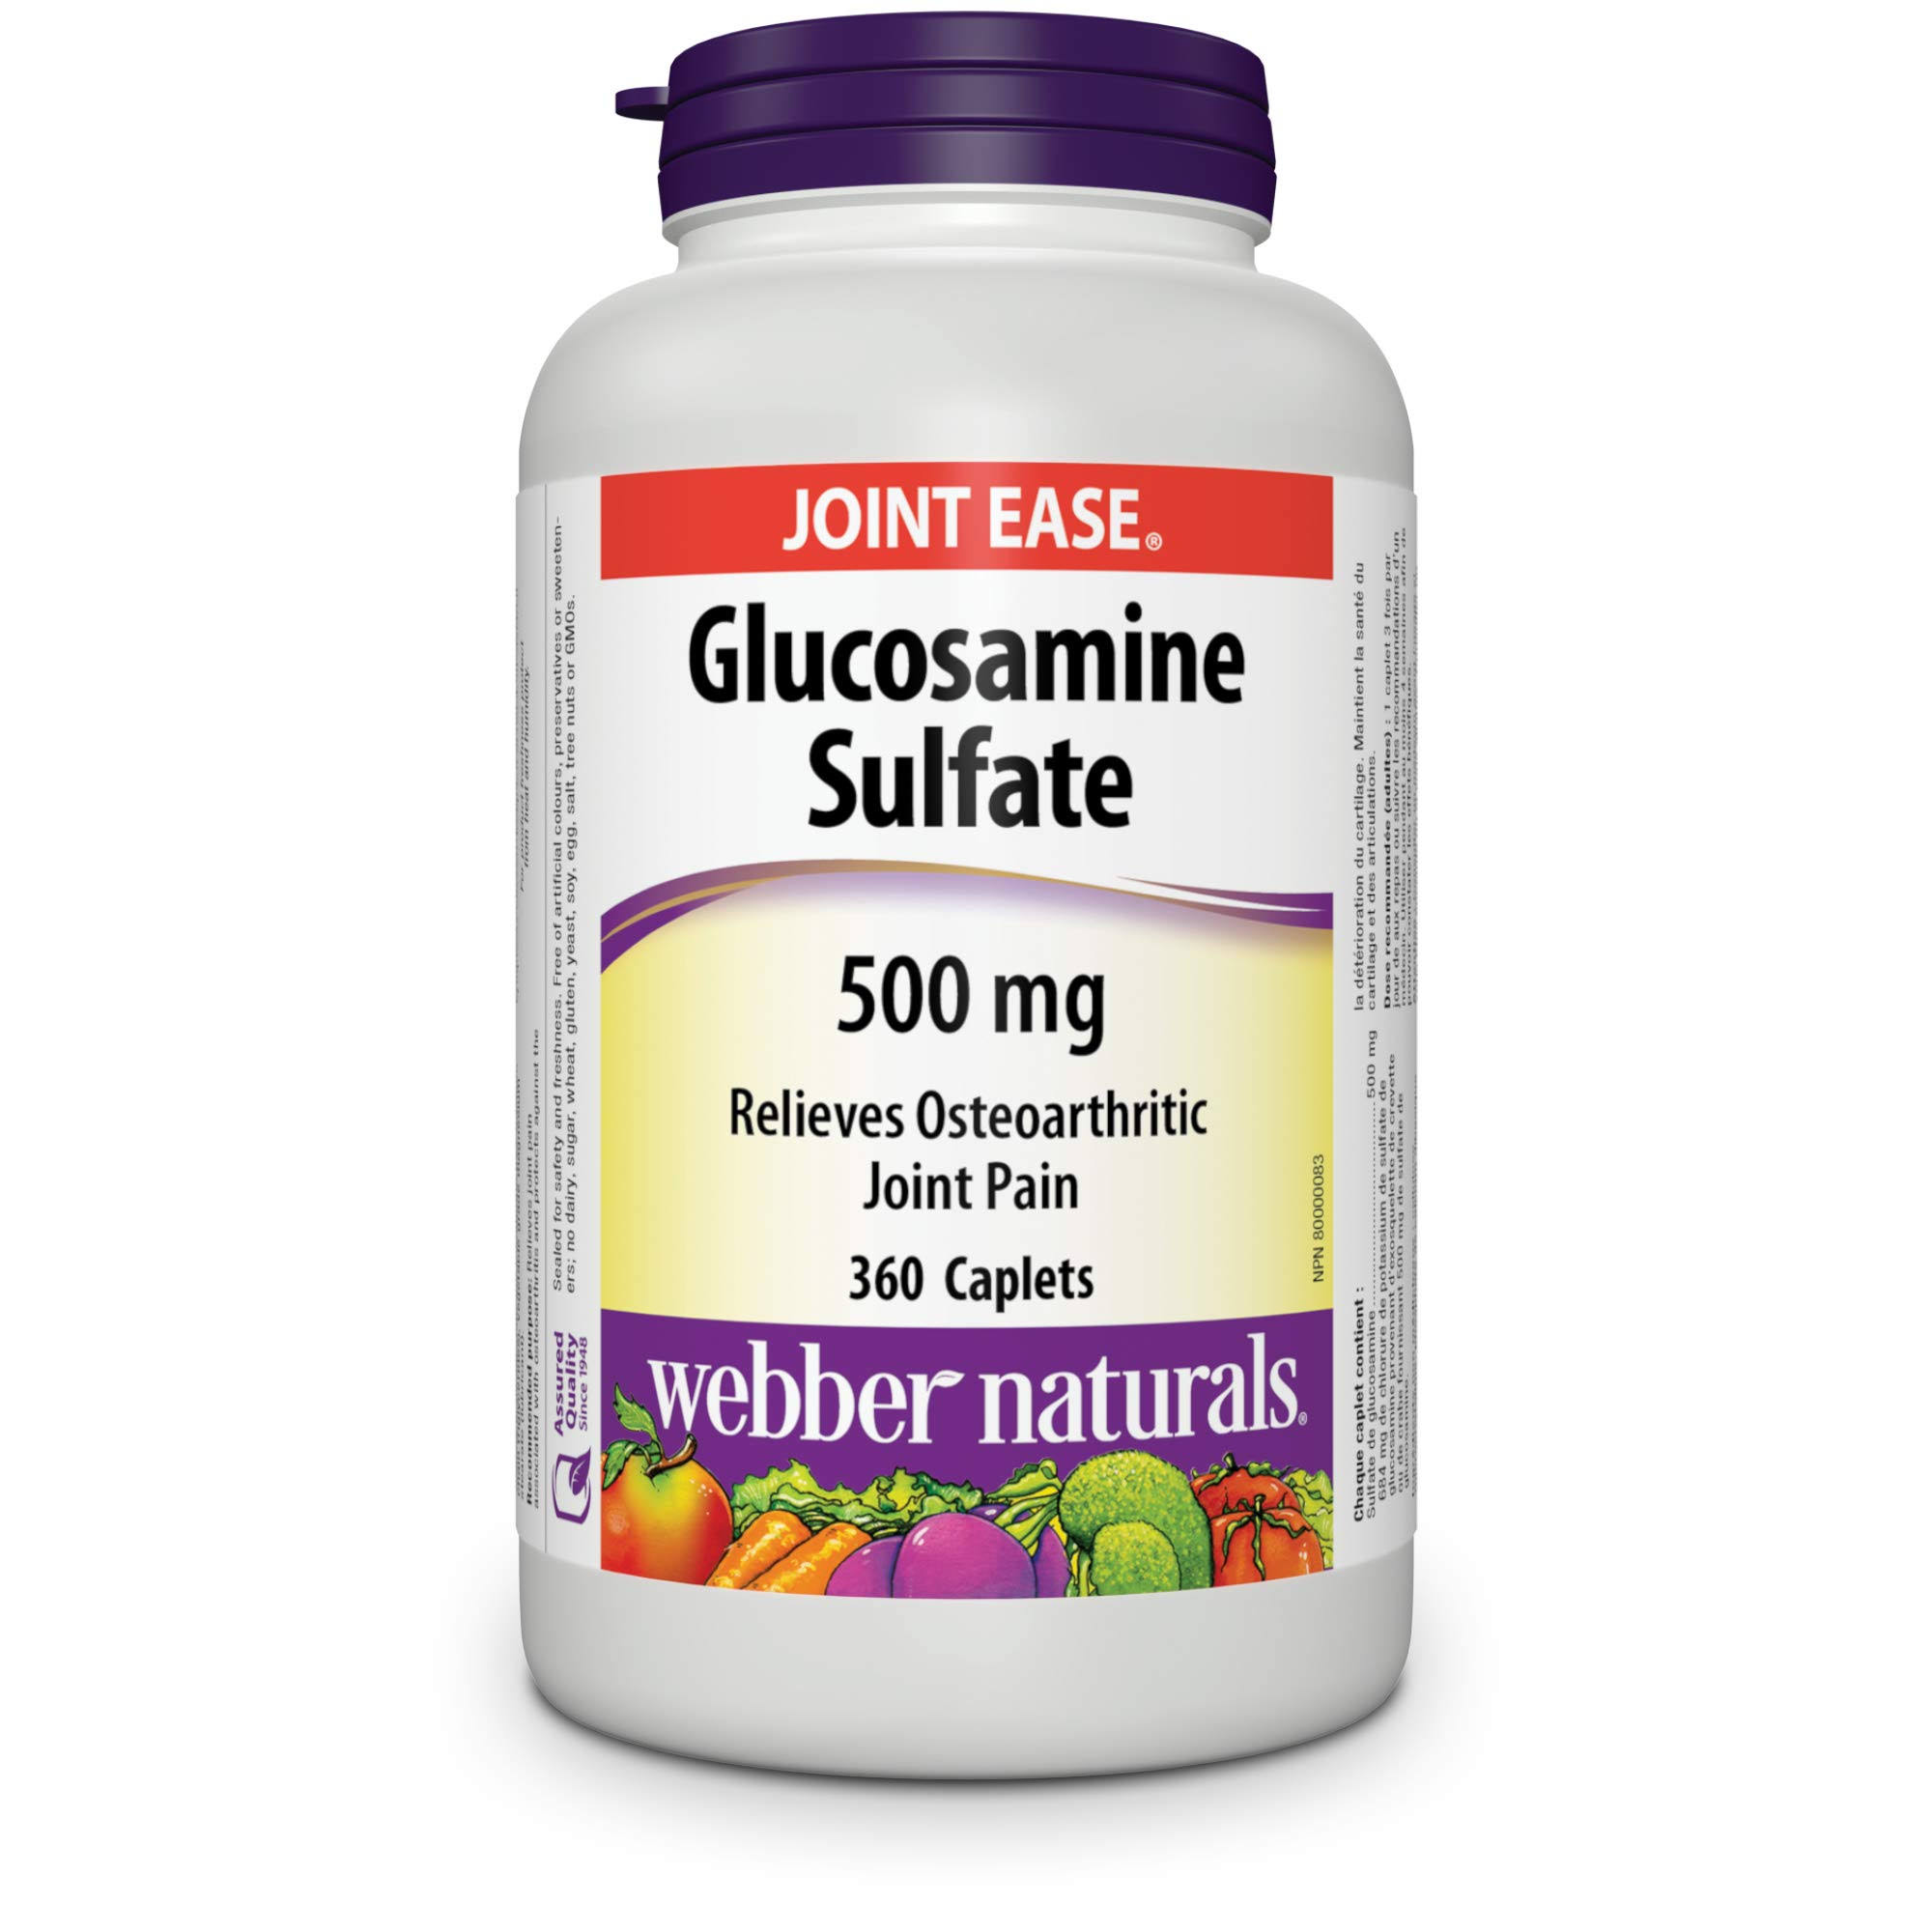 Webber Naturals Glucosamine Sulfate Super Size Caplets - 500mg, 360ct